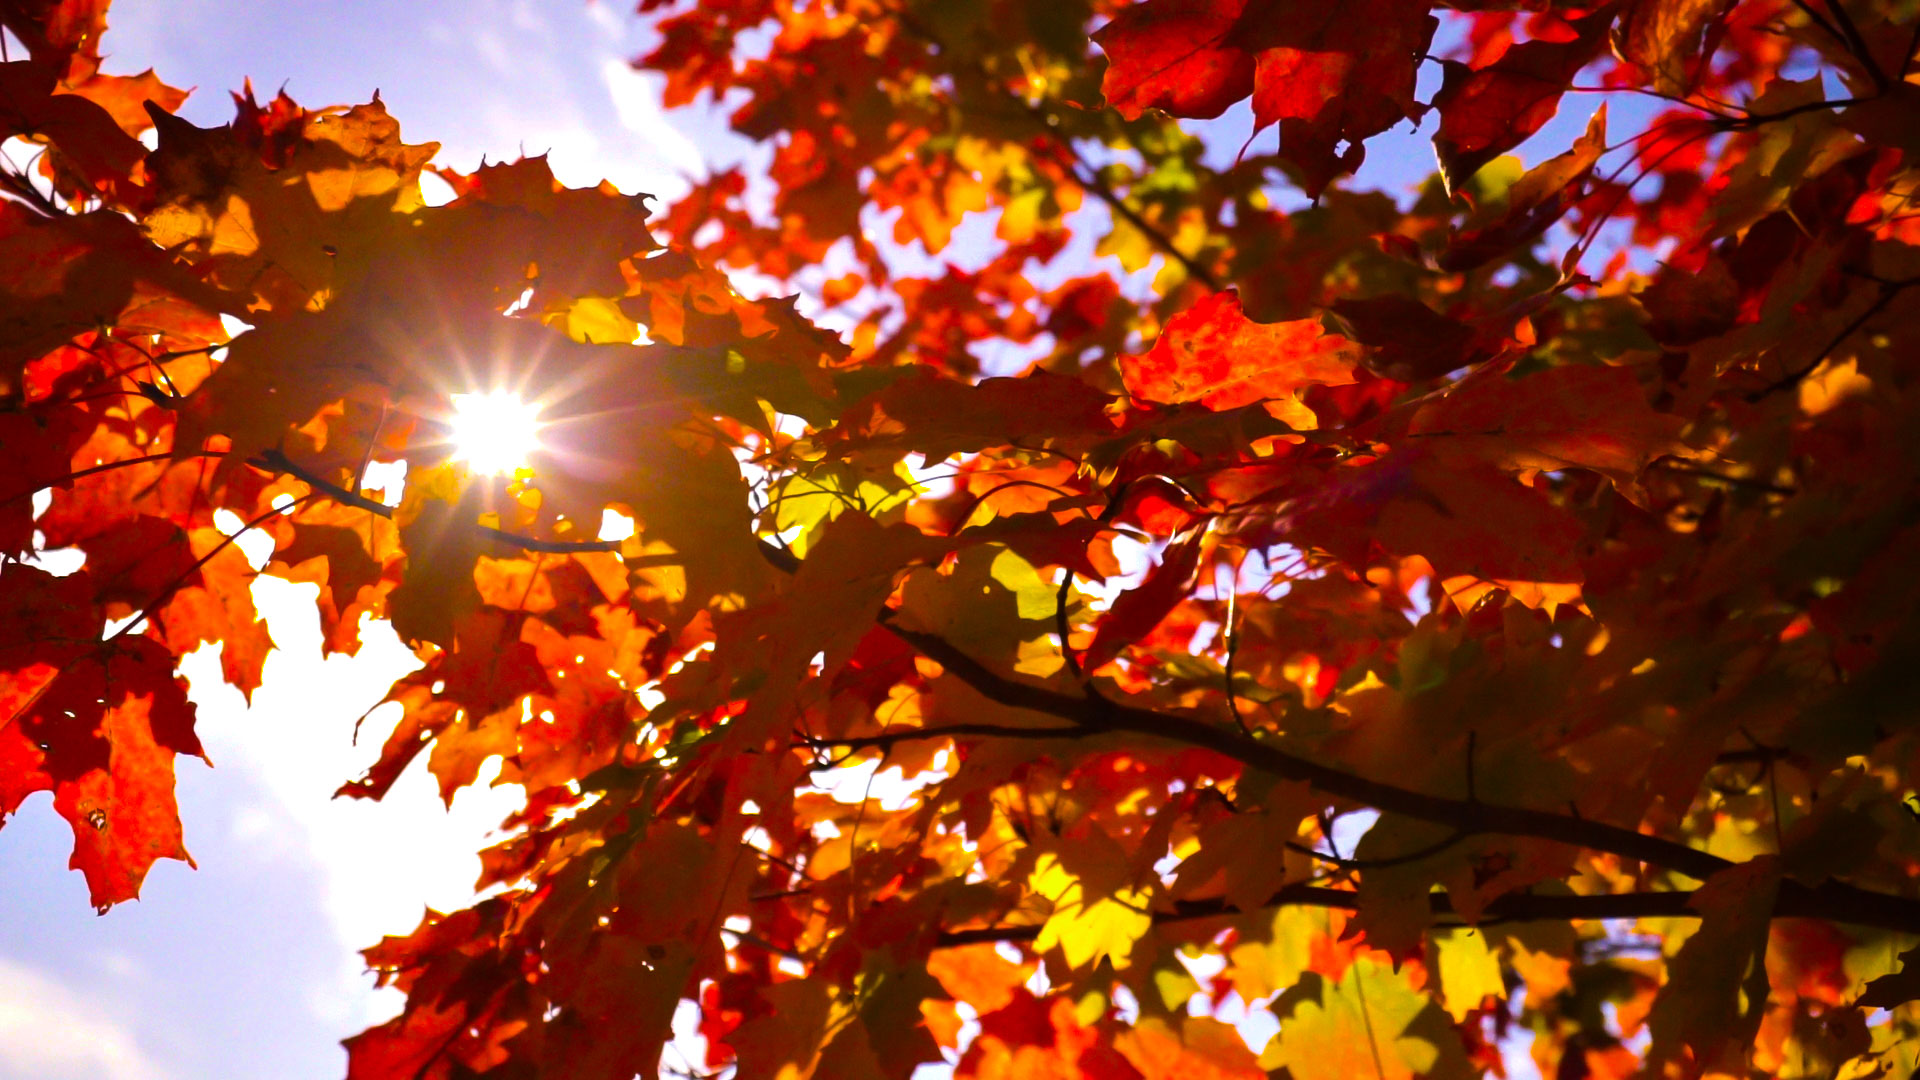 sunburst-leaves-focus (1).jpg